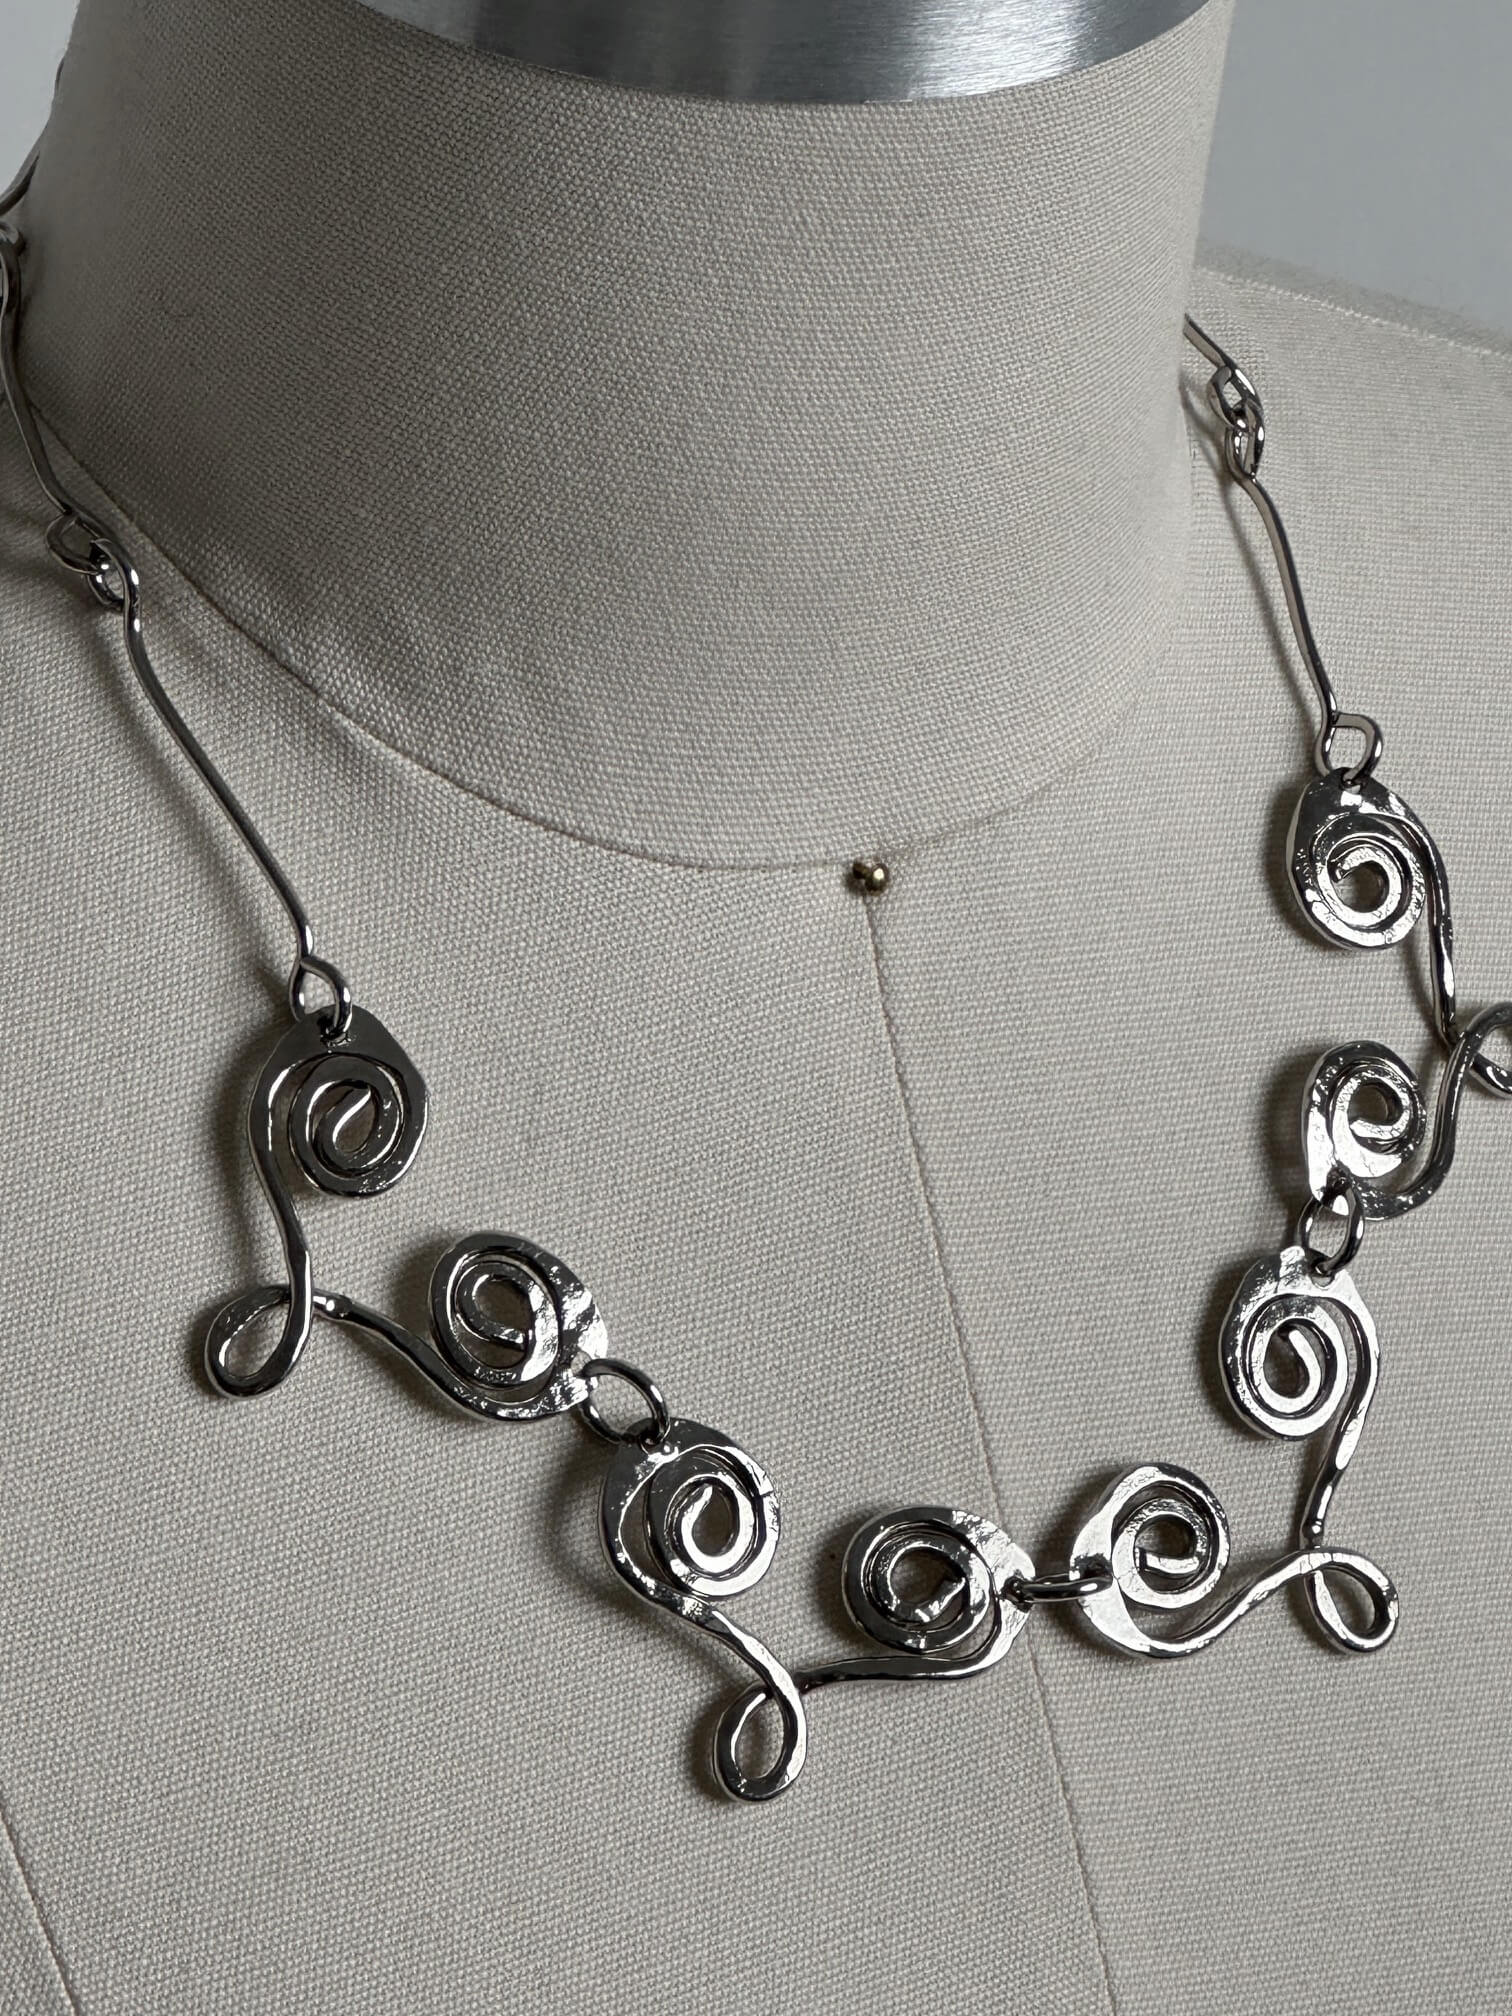 Vintage Swirl Necklace